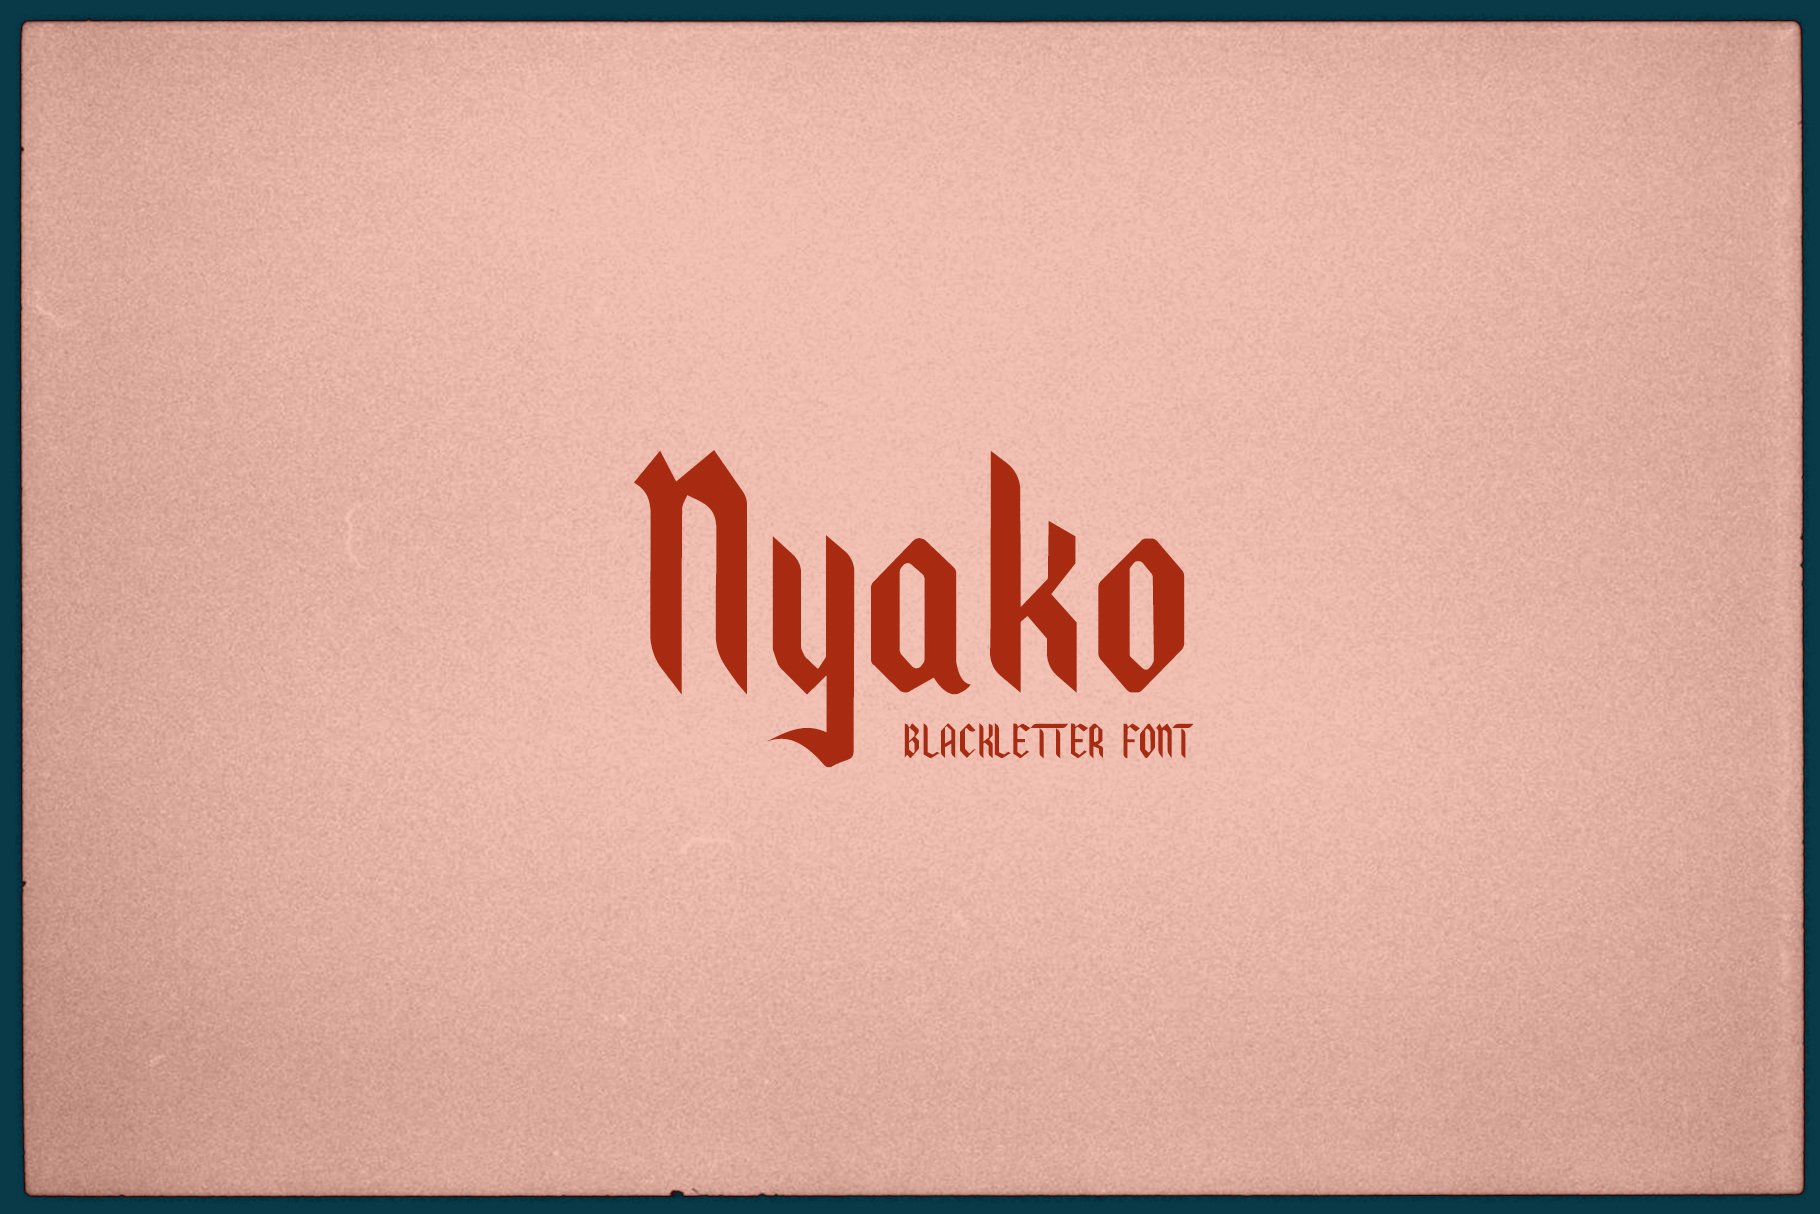 Nyako Font cover image.